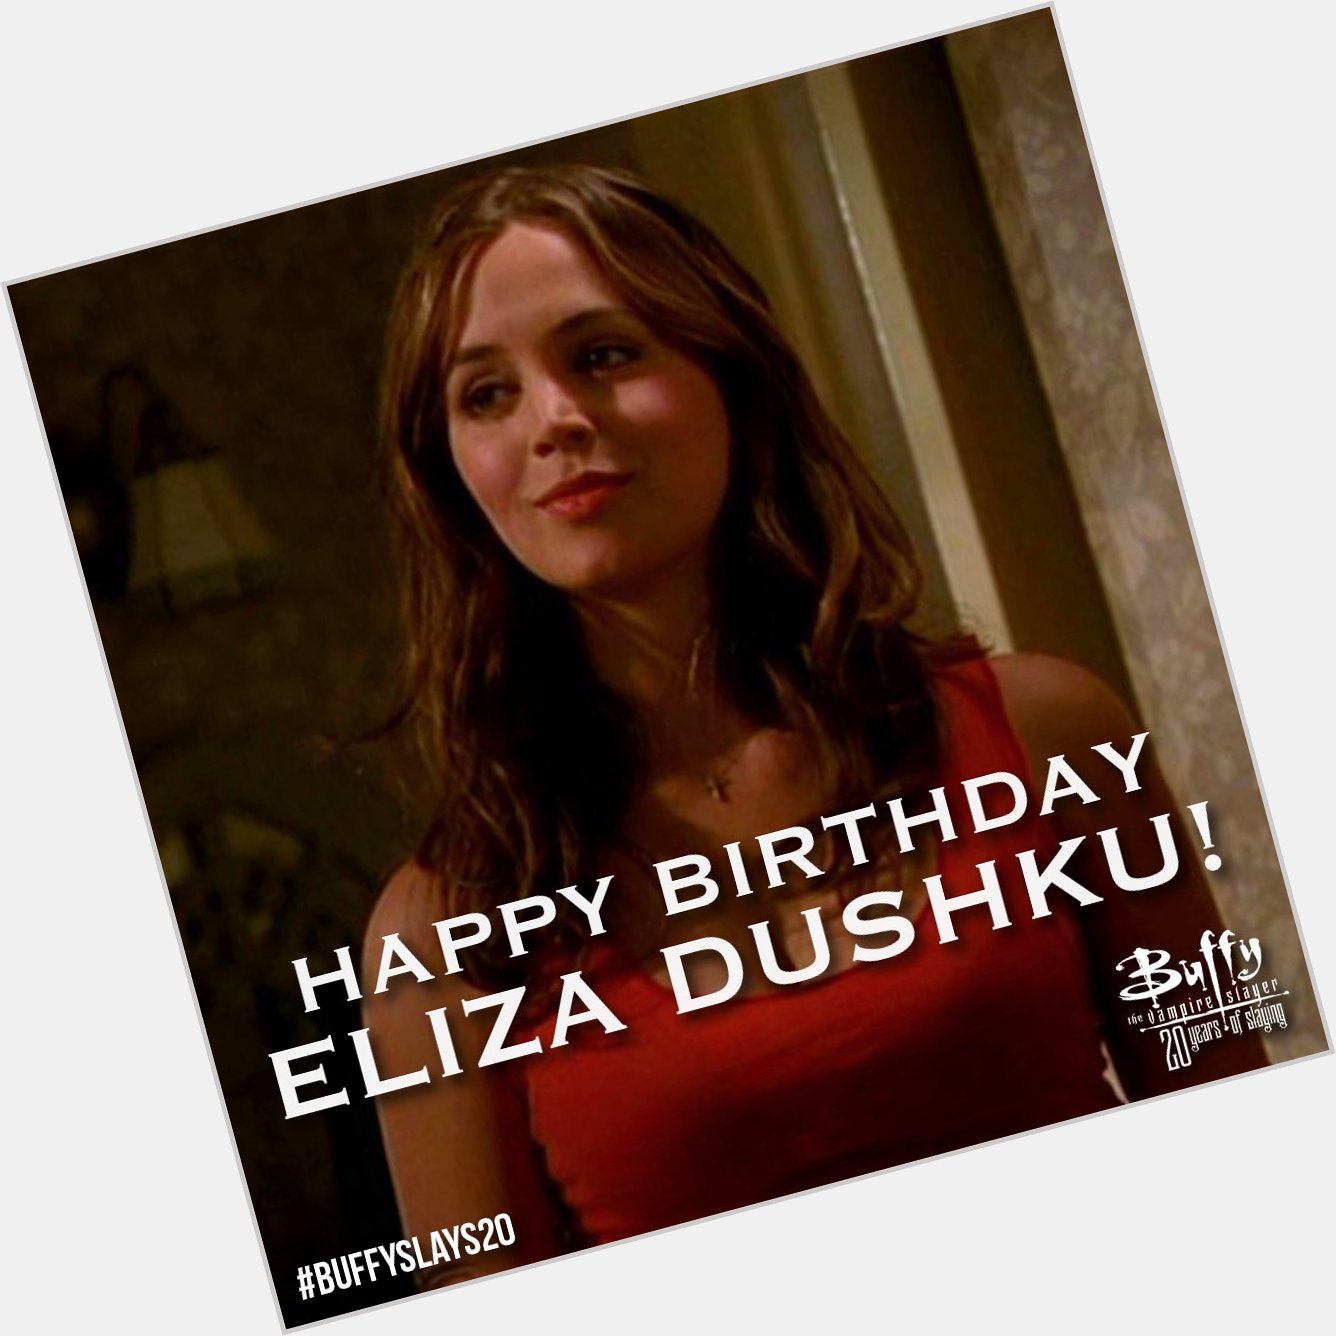 Happy birthday to our favorite dark slayer, Eliza Dushku! 